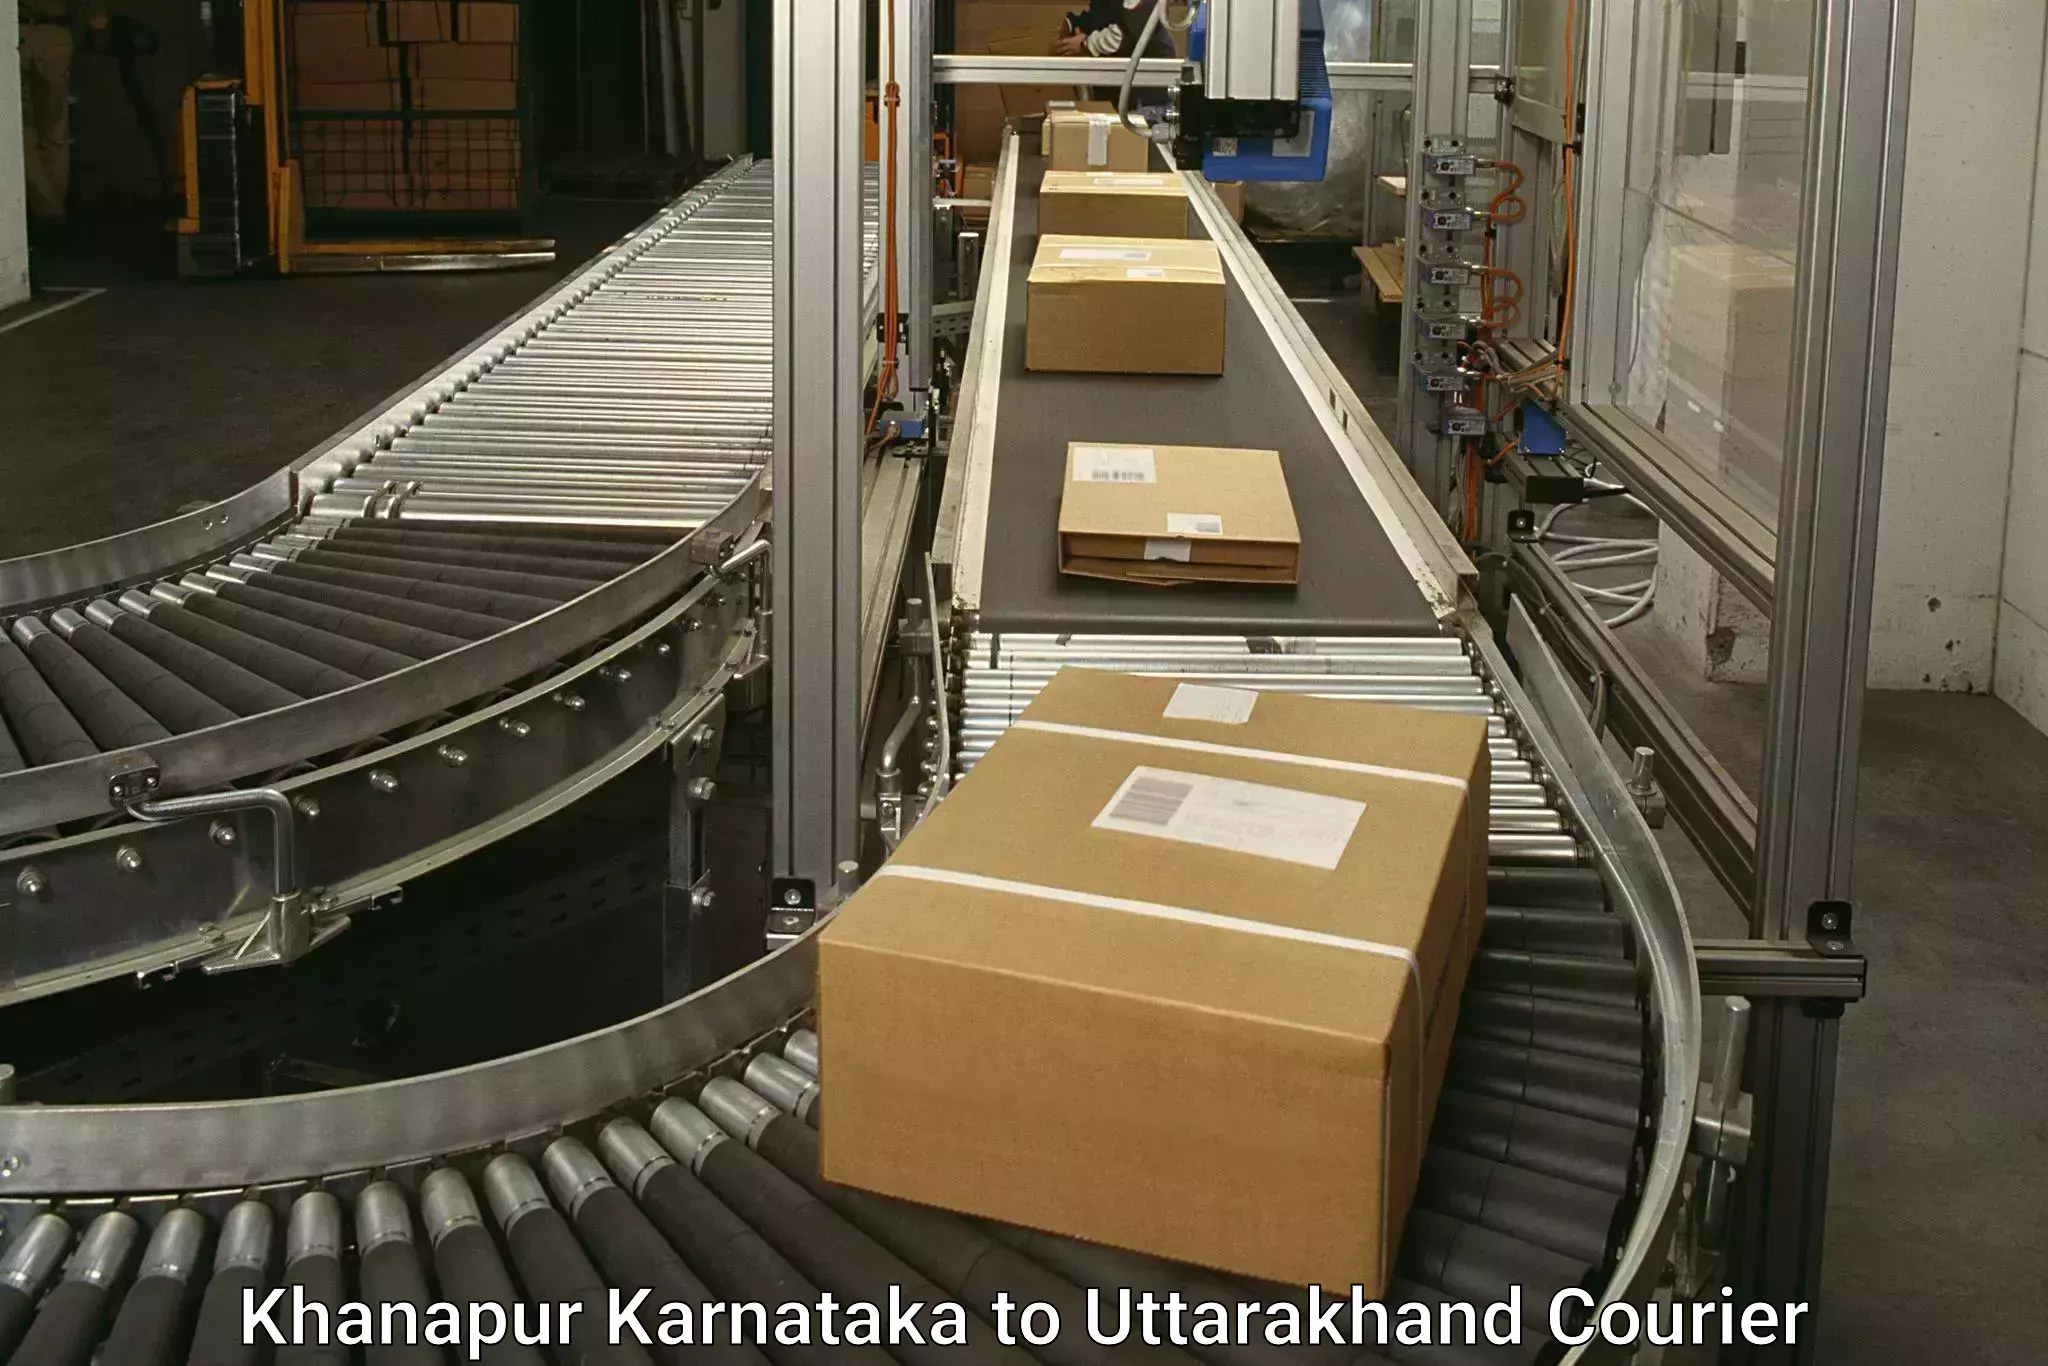 Express delivery solutions Khanapur Karnataka to Lansdowne